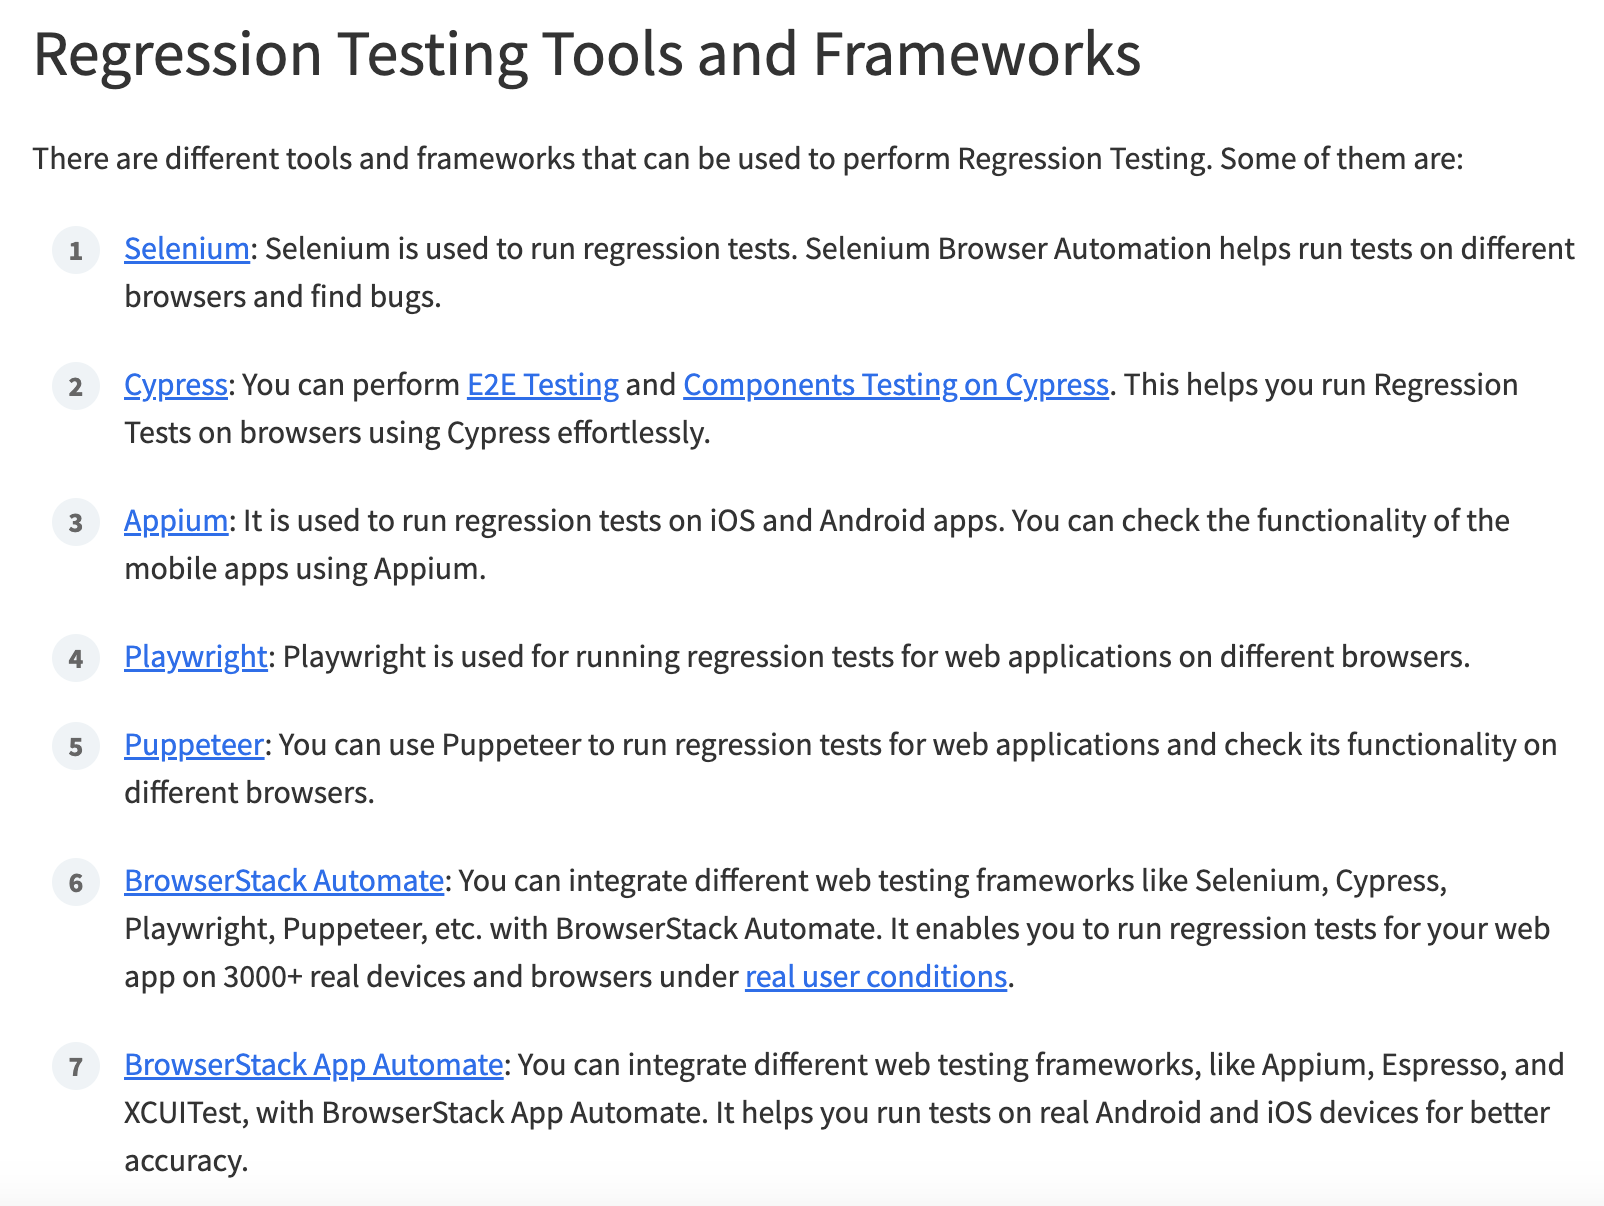 List of regression testing tools